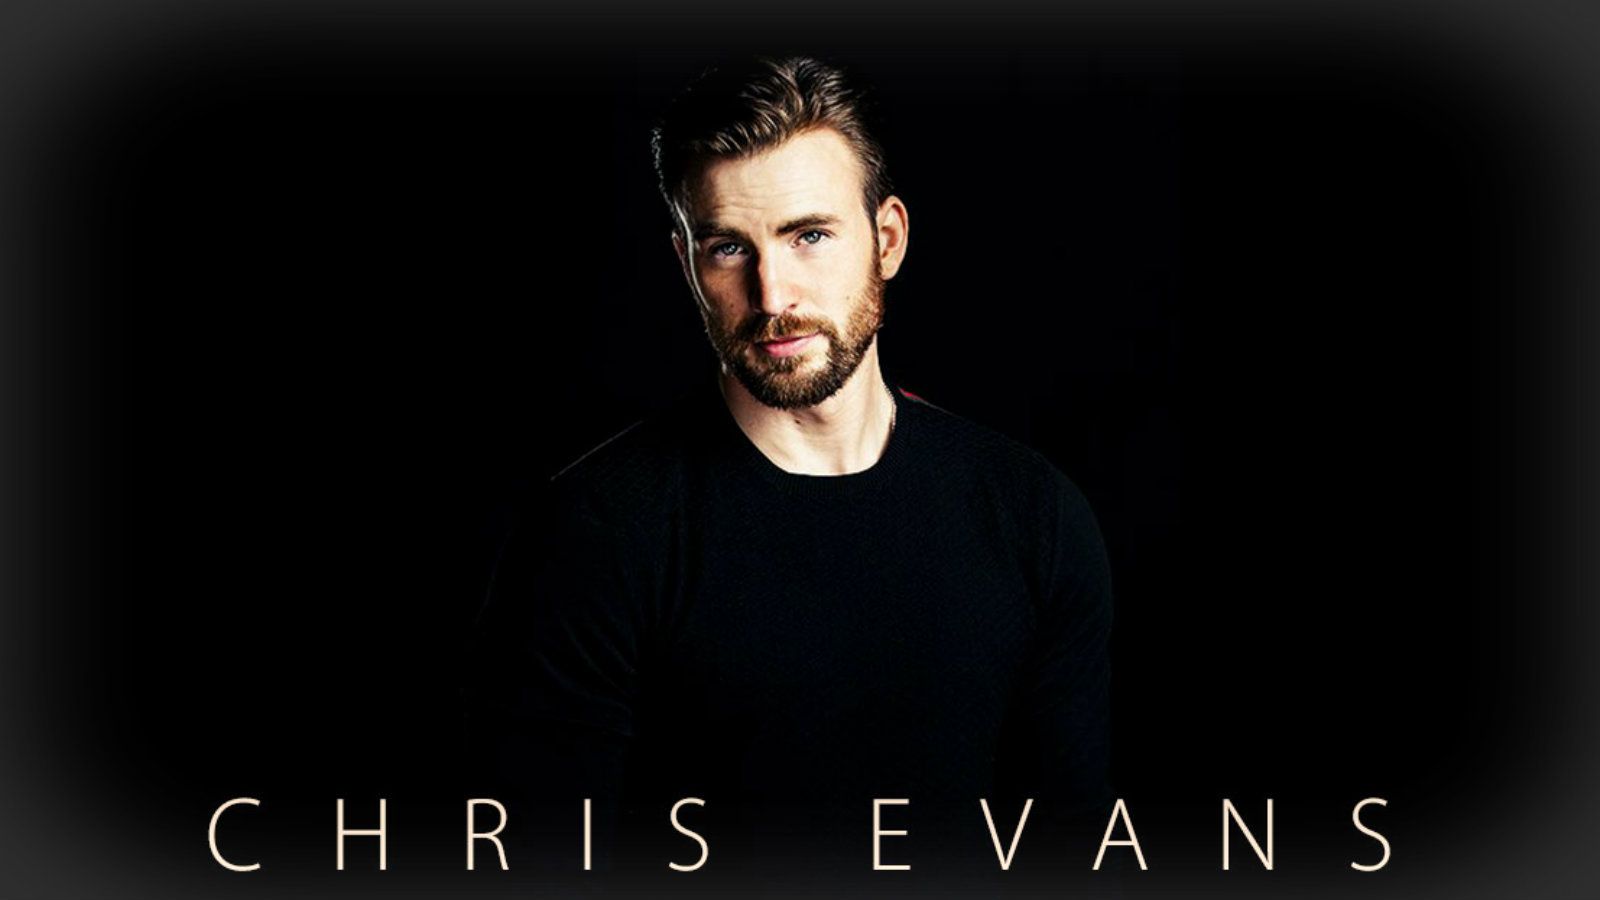 Chris Evans HD Wallpaper & Background Image